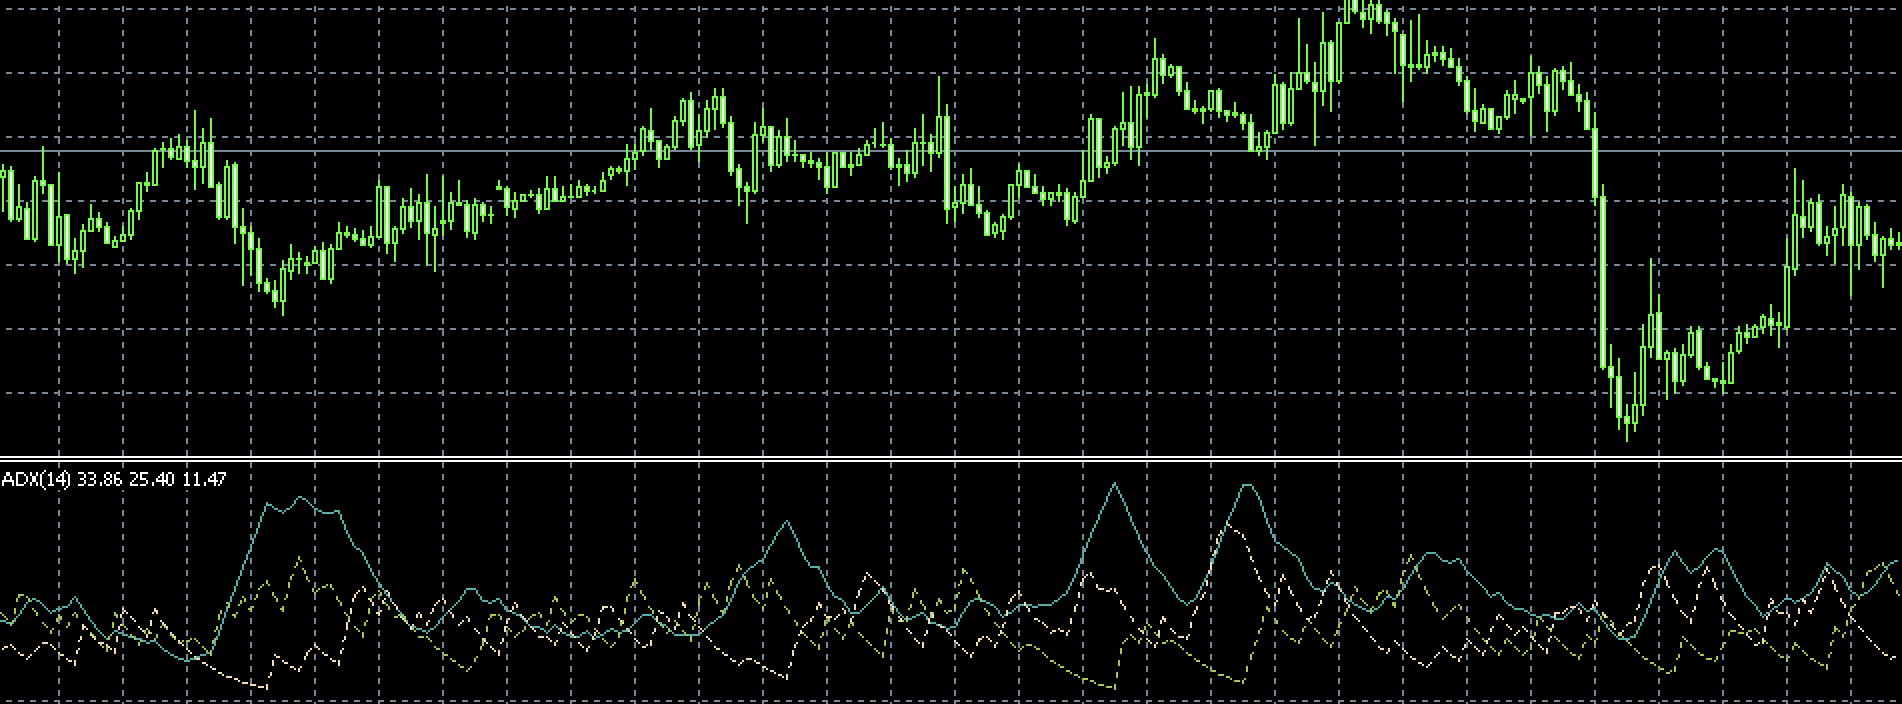 Grafik Vantage Markets MetaTrader 5 dengan indikator ADX